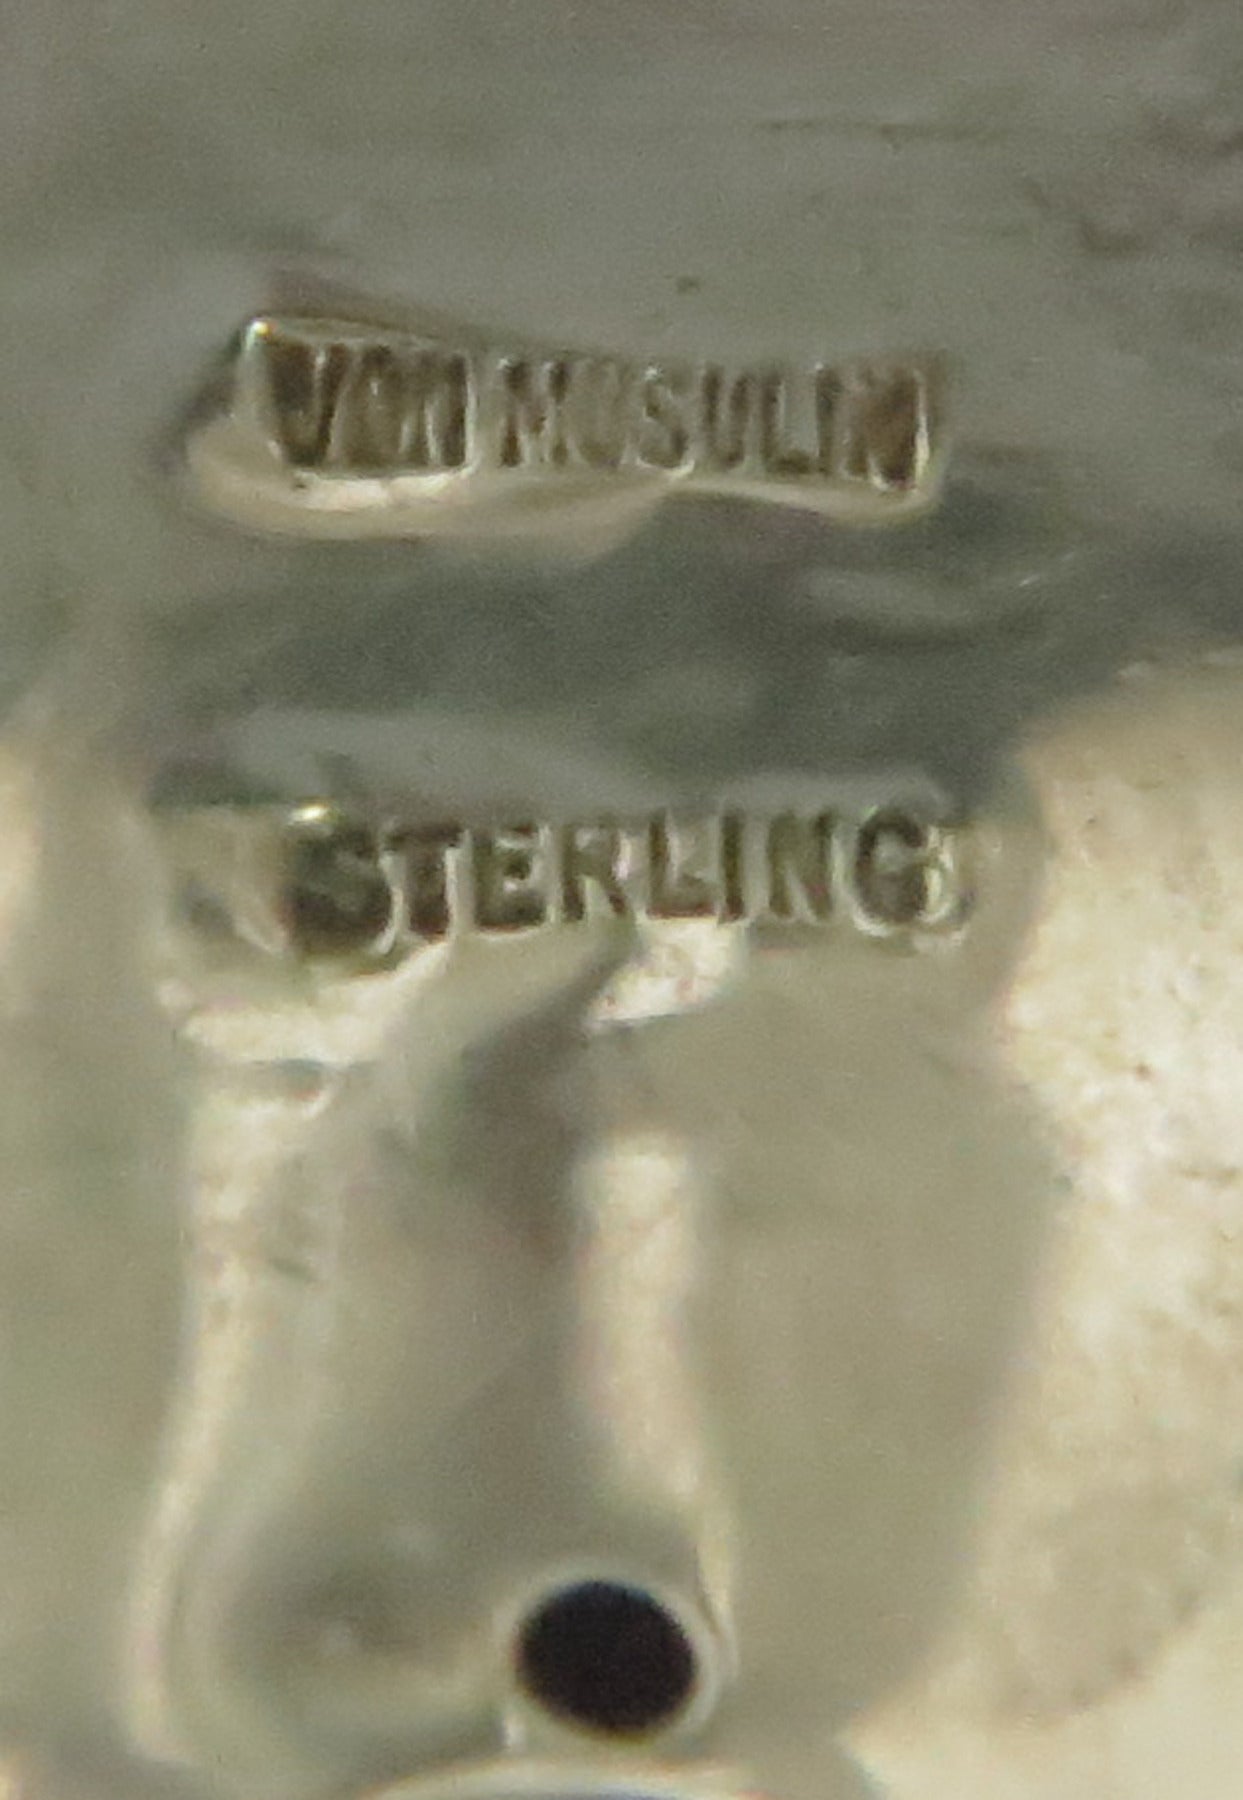 Women's Patricia Von Musulin sterling silver clip on earrings